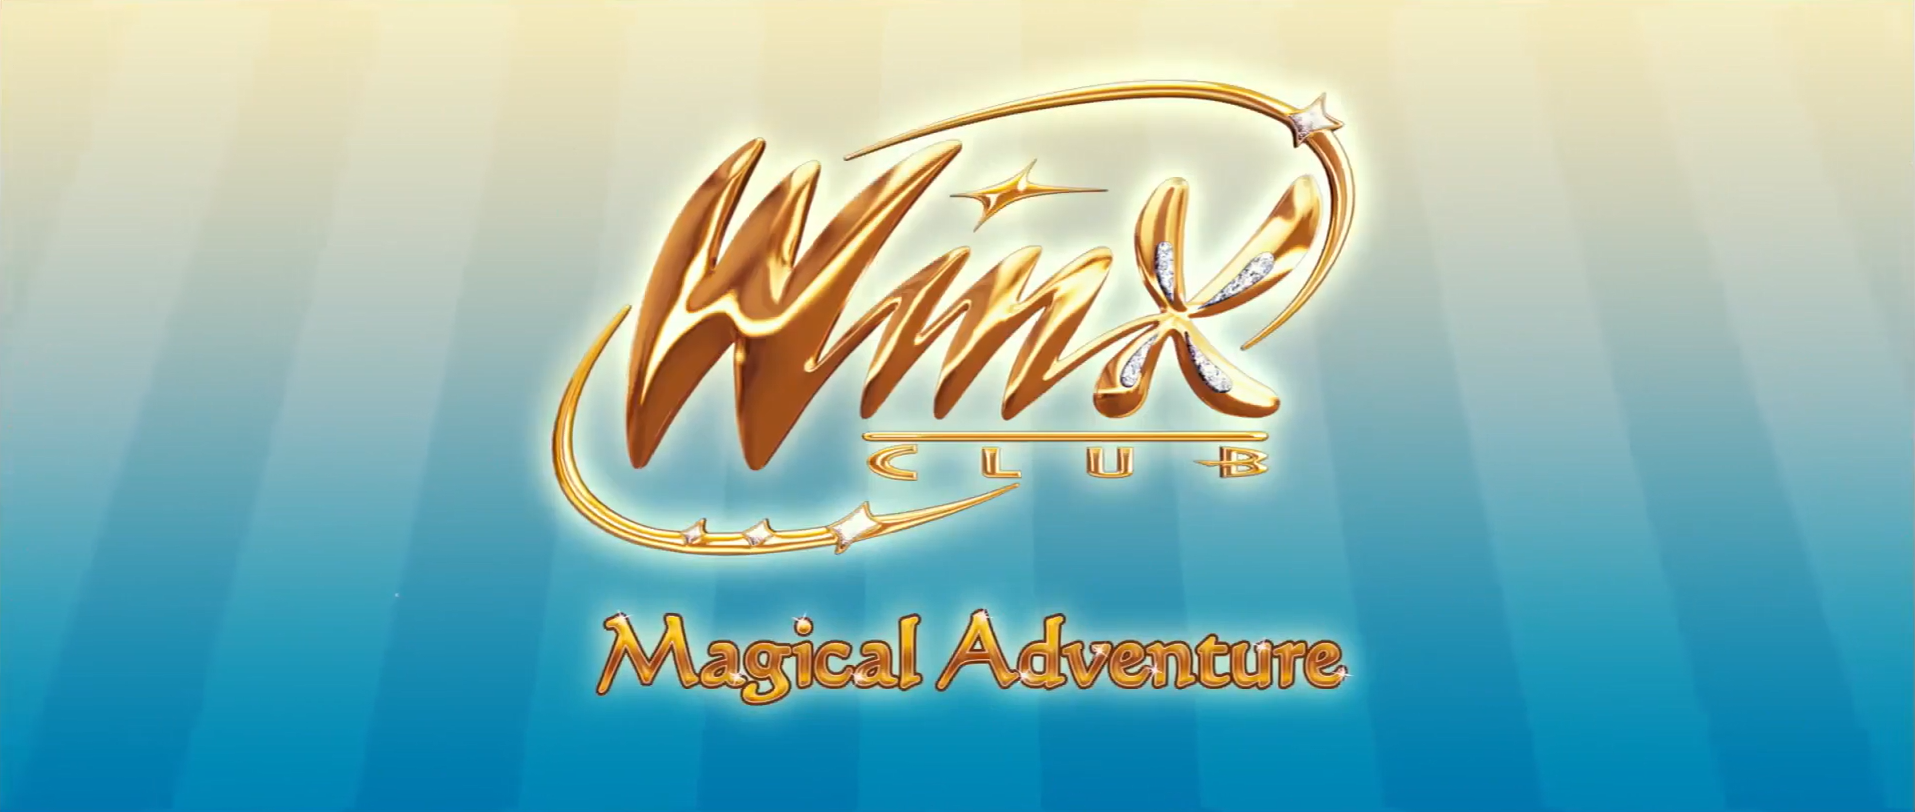 winx club magical adventure free torrent download